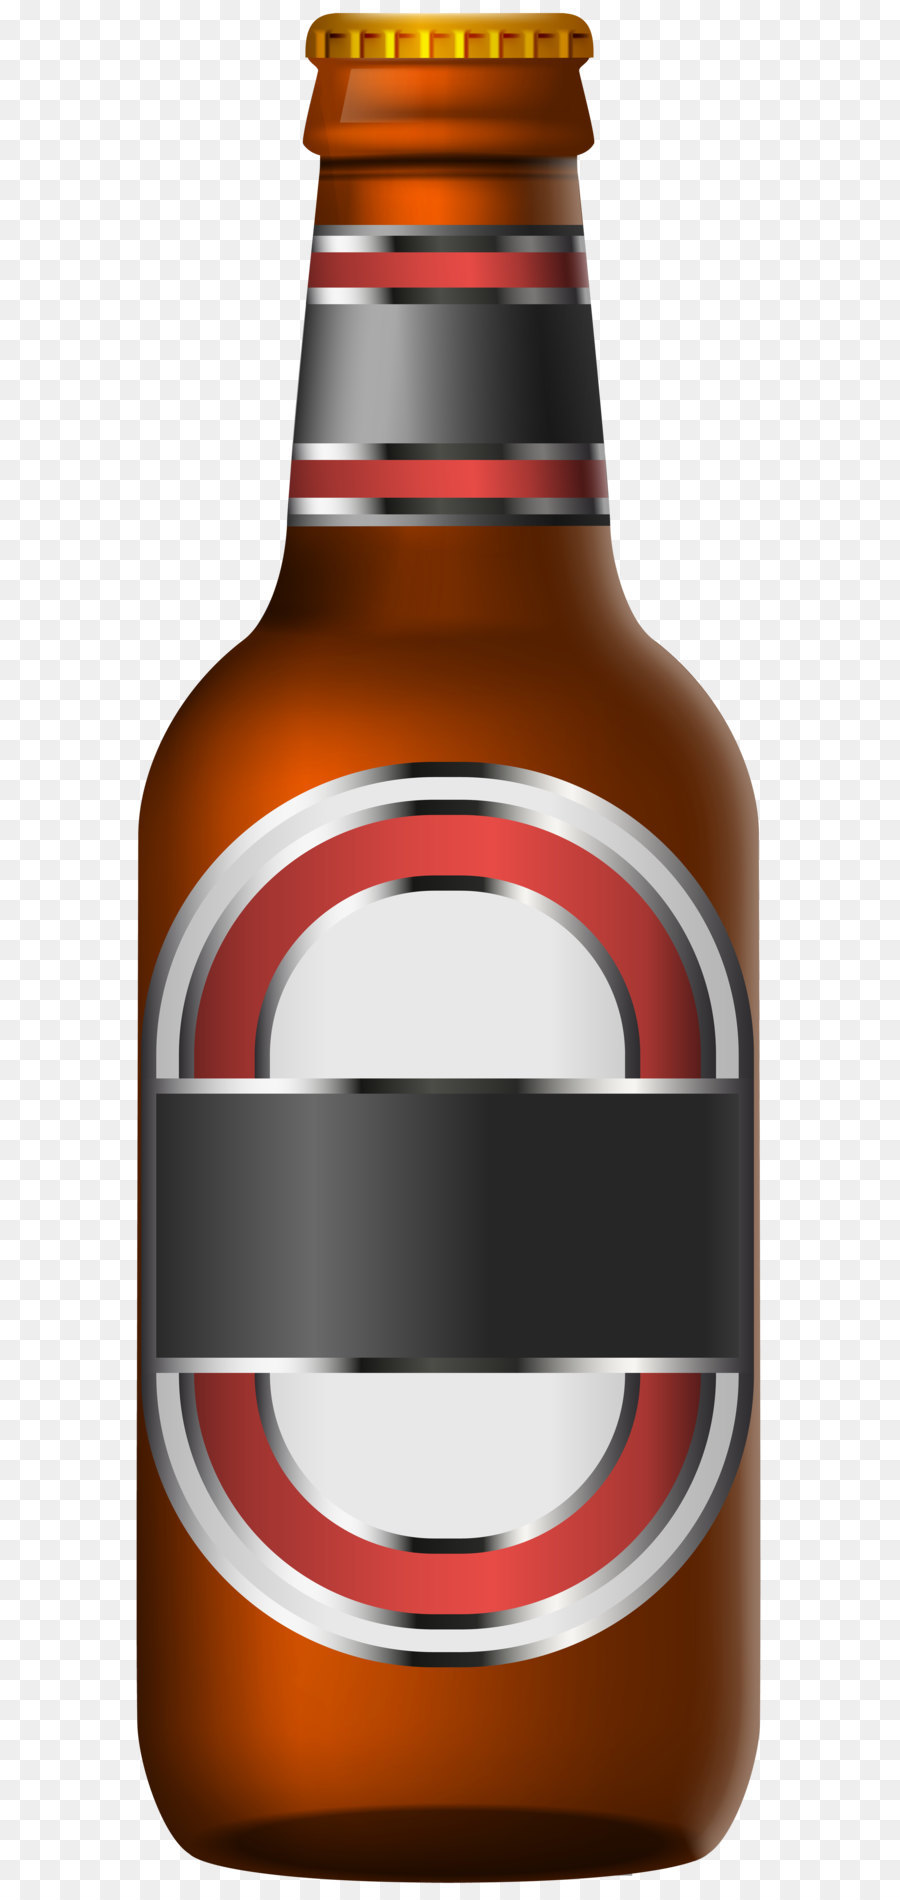 Beer clipart beer bottle, Beer beer bottle Transparent ...